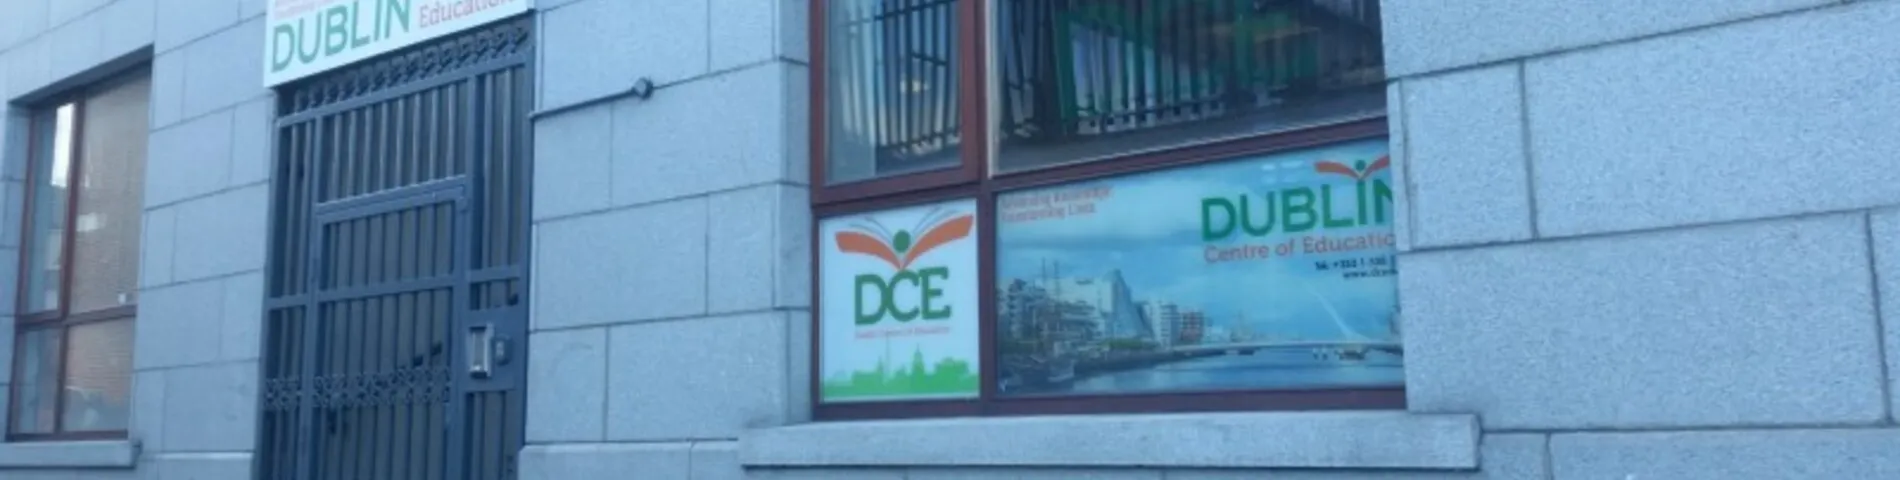 Dublin Centre of Education画像1